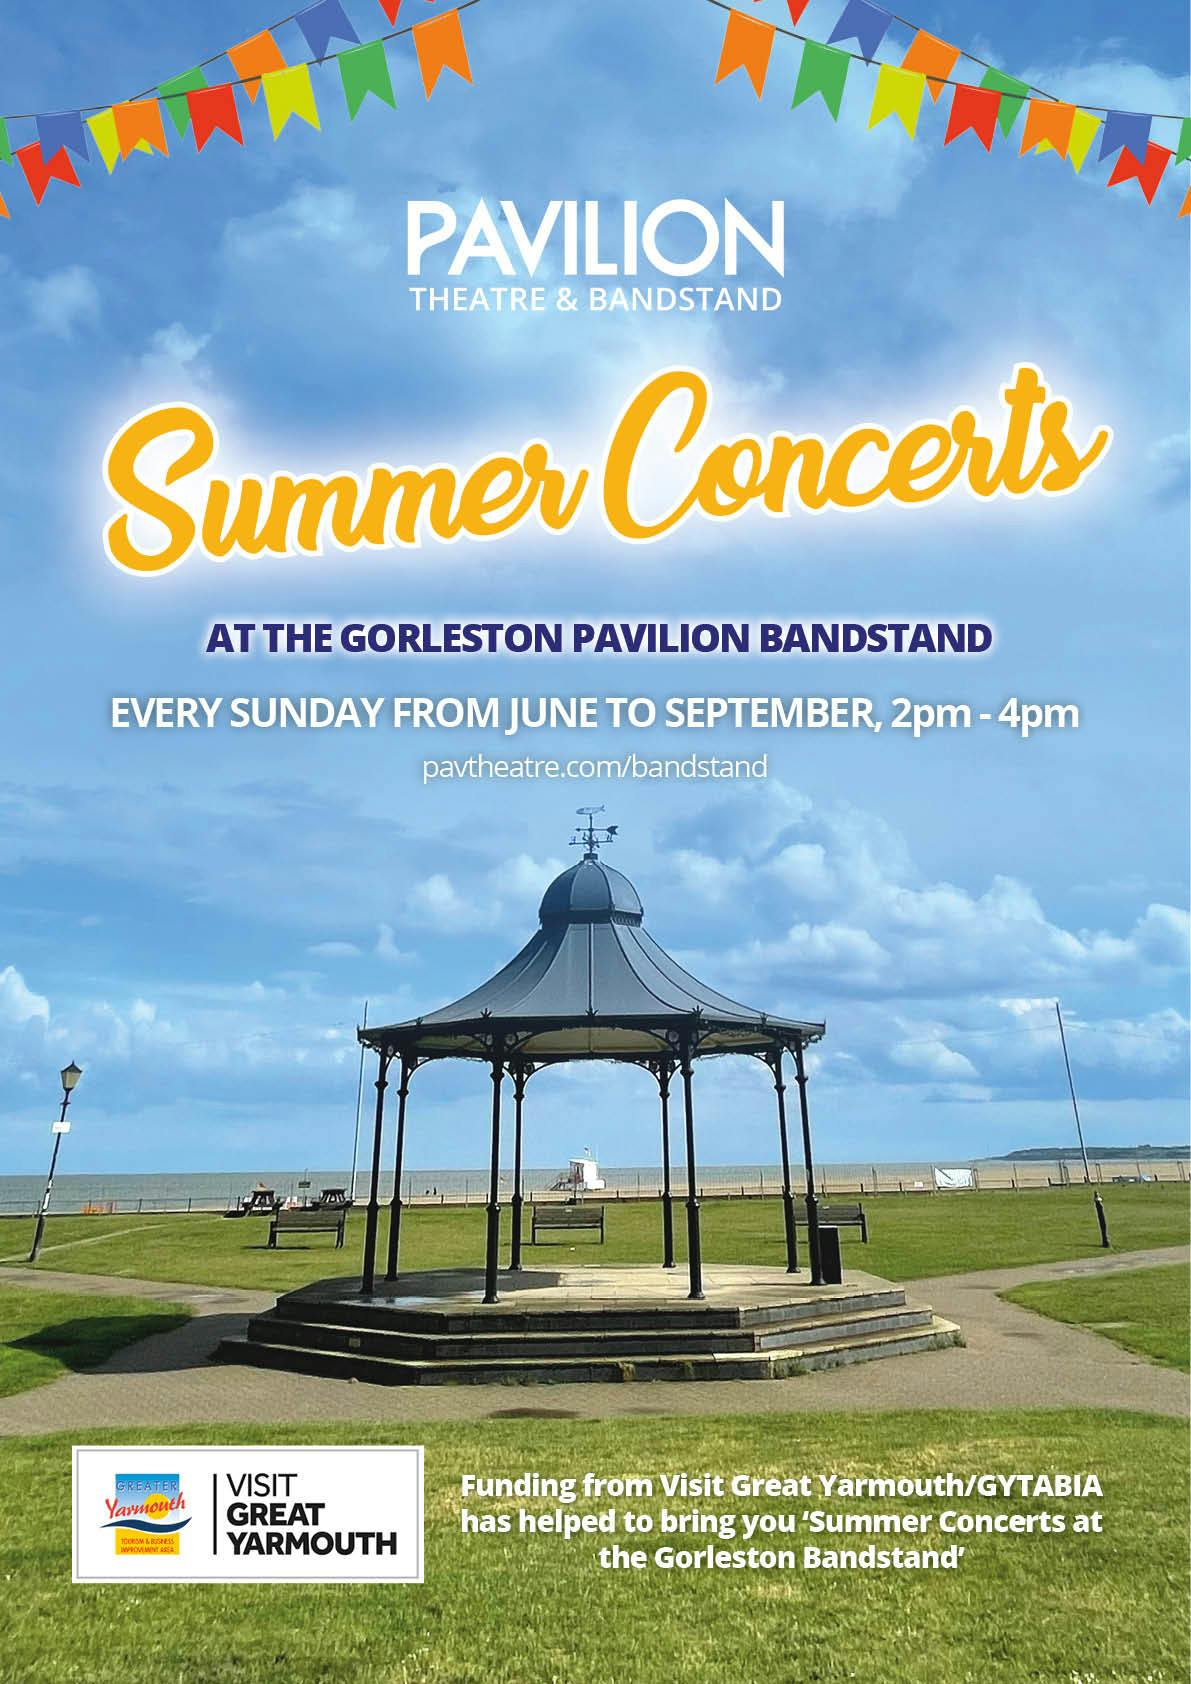 The Gorleston Pavilion Bandstand